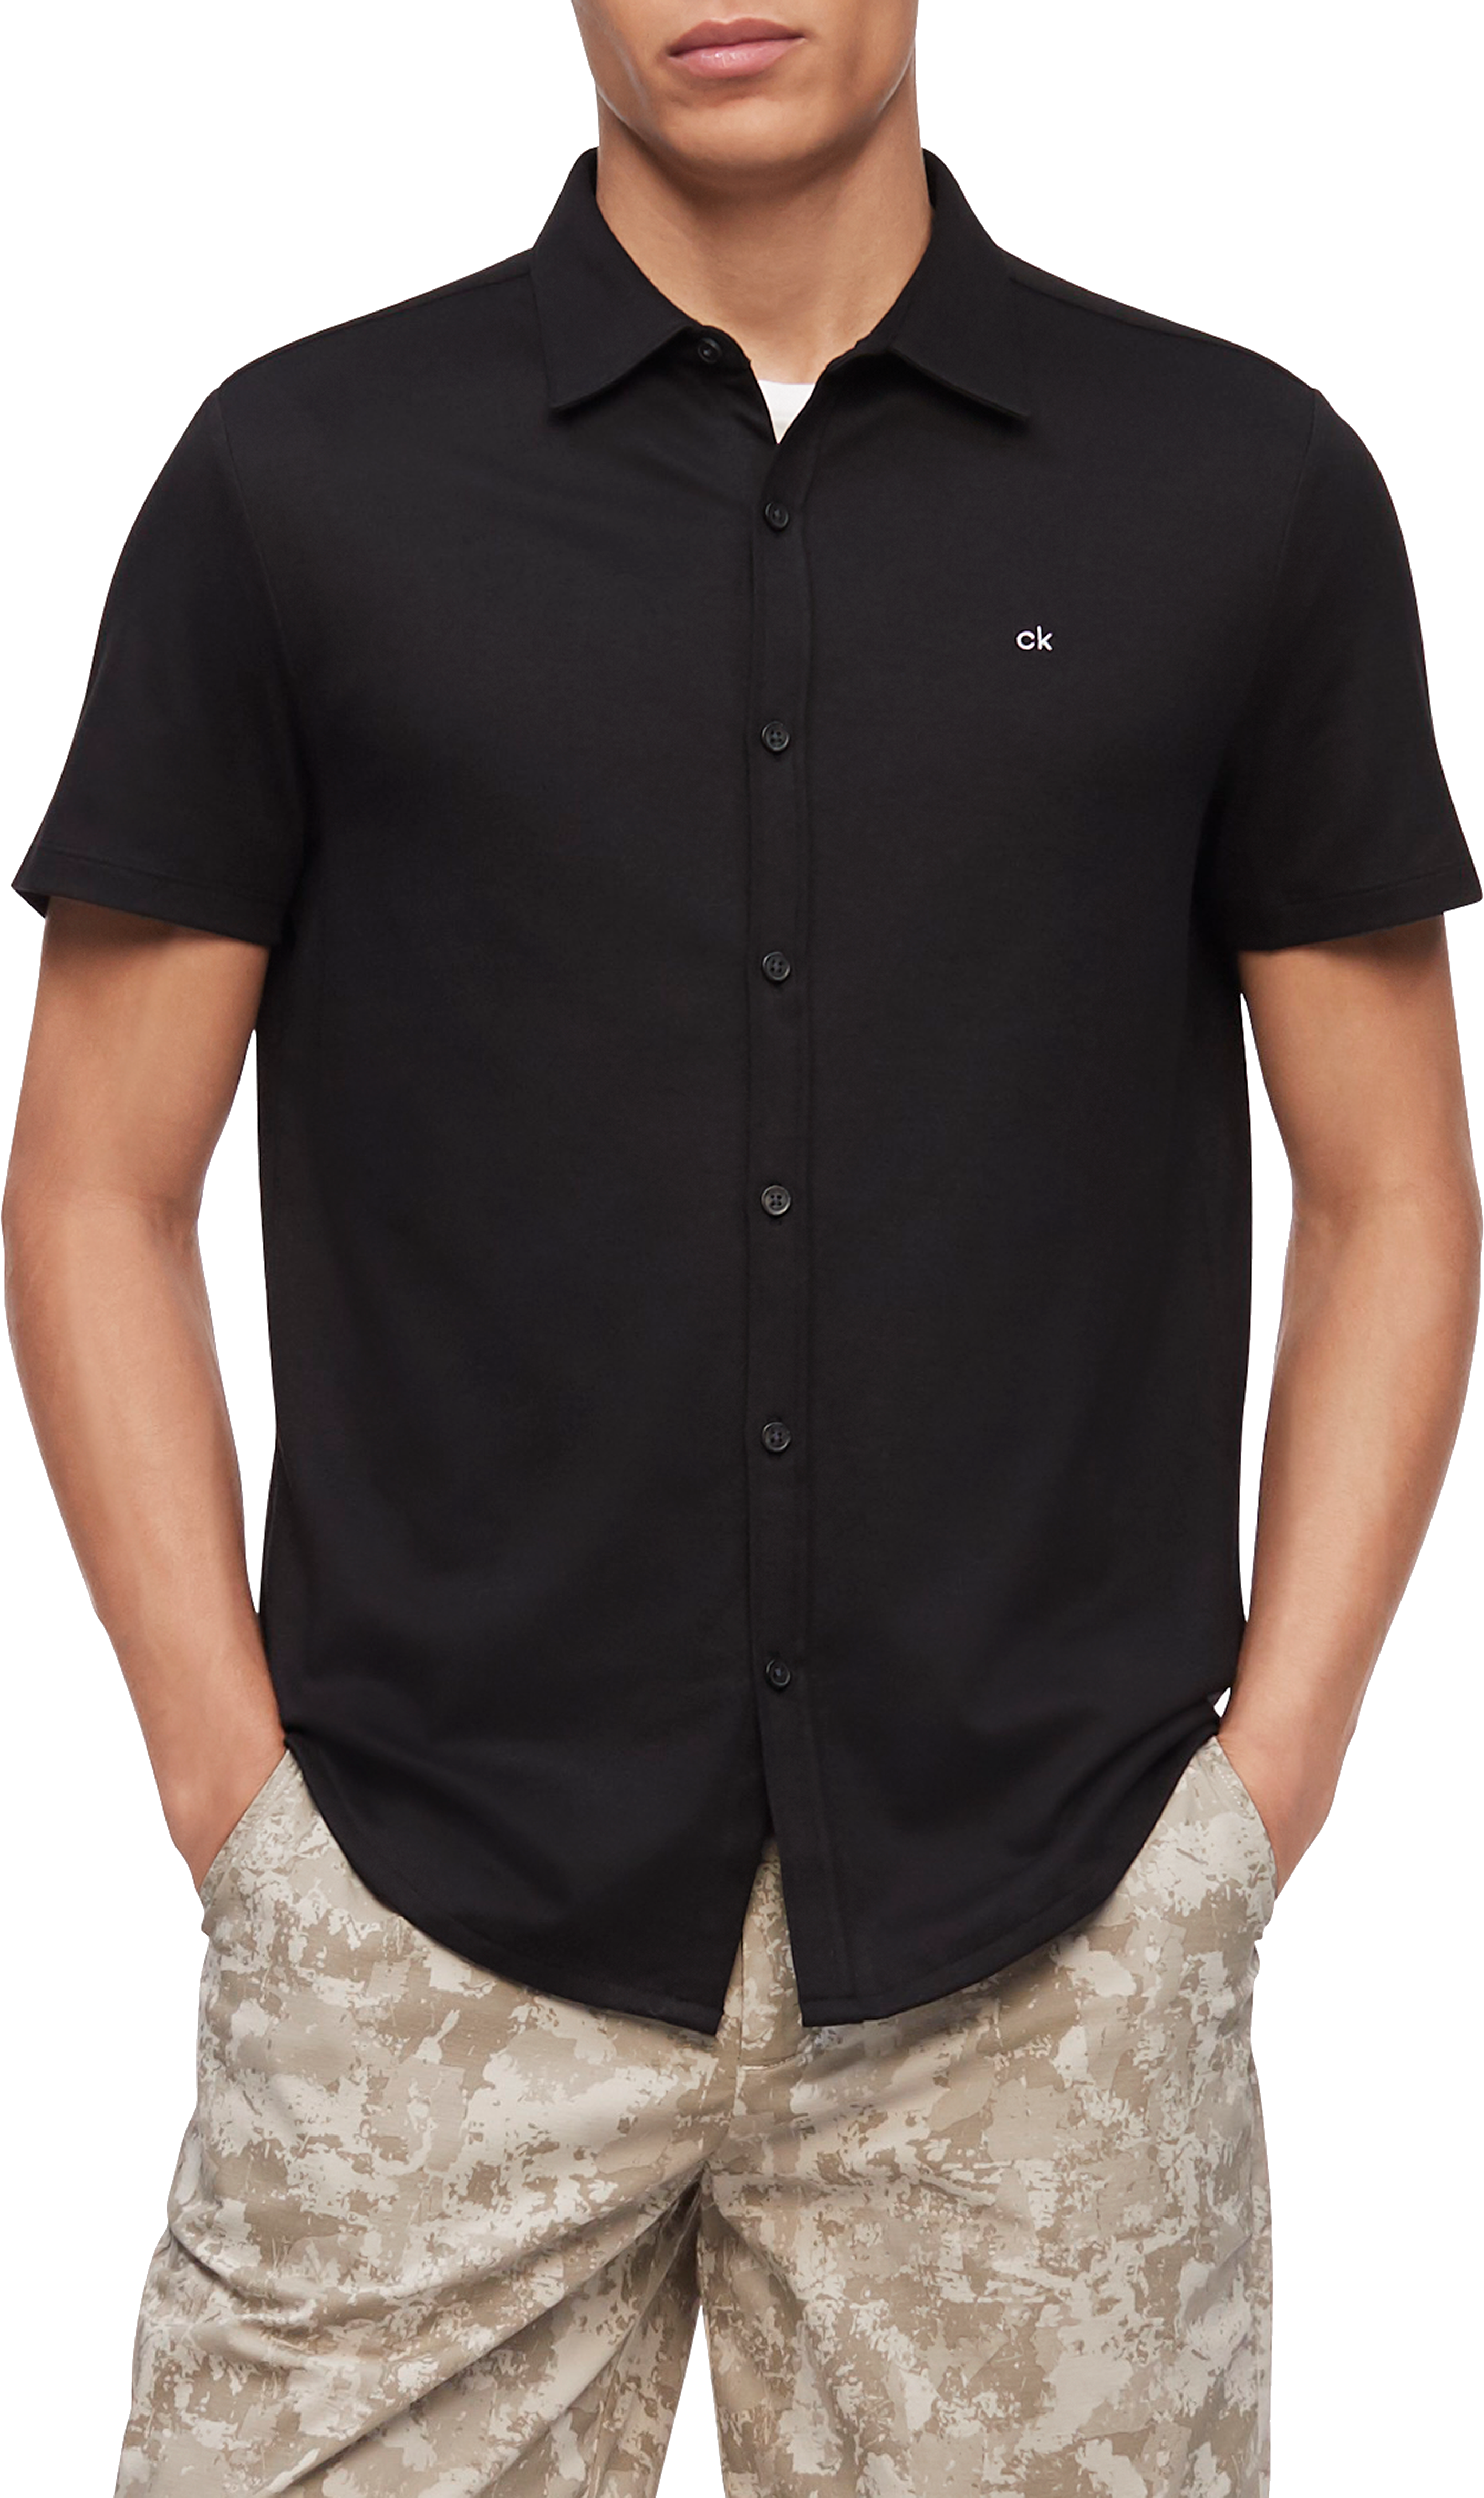 Calvin Klein Liquid Touch Solid Knit Short Sleeve Shirt Men S Shirts Men S Wearhouse